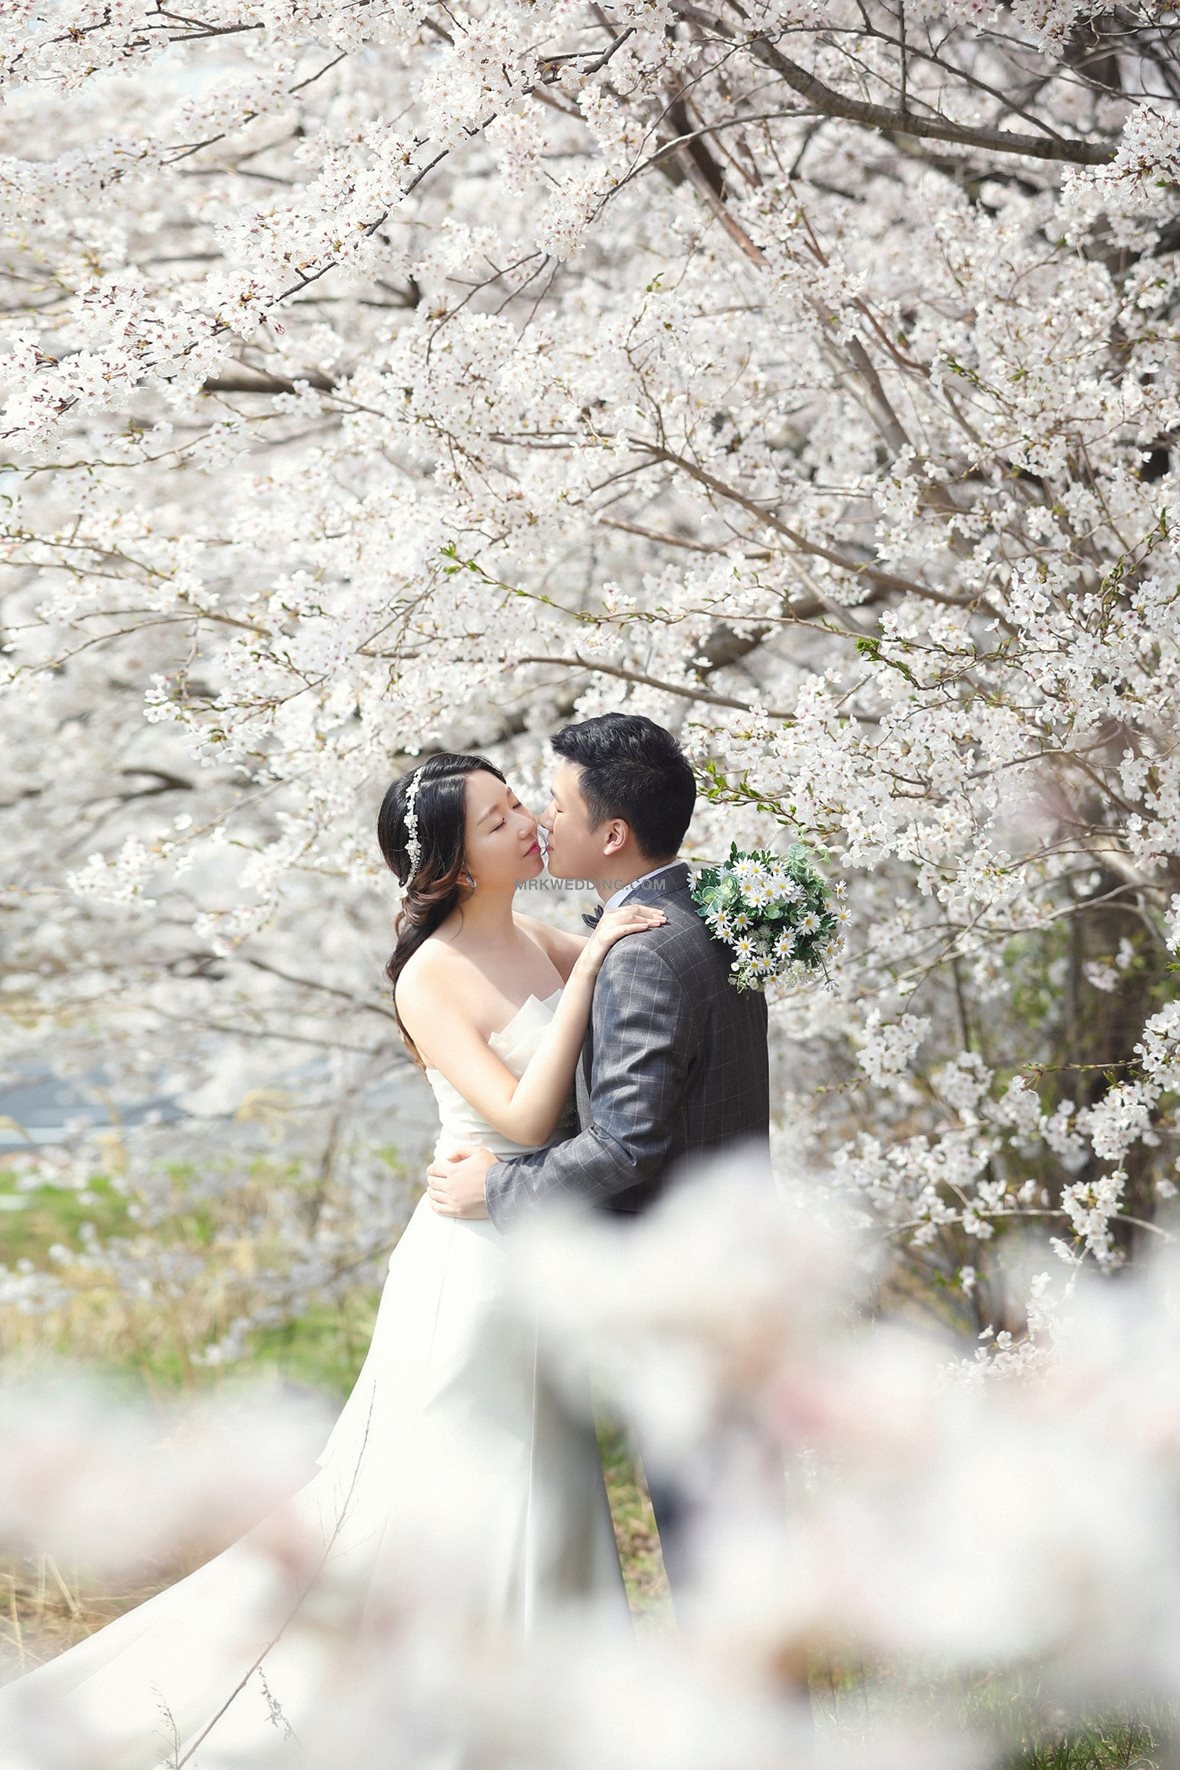 korea pre wedding (3) - 복사본.jpg